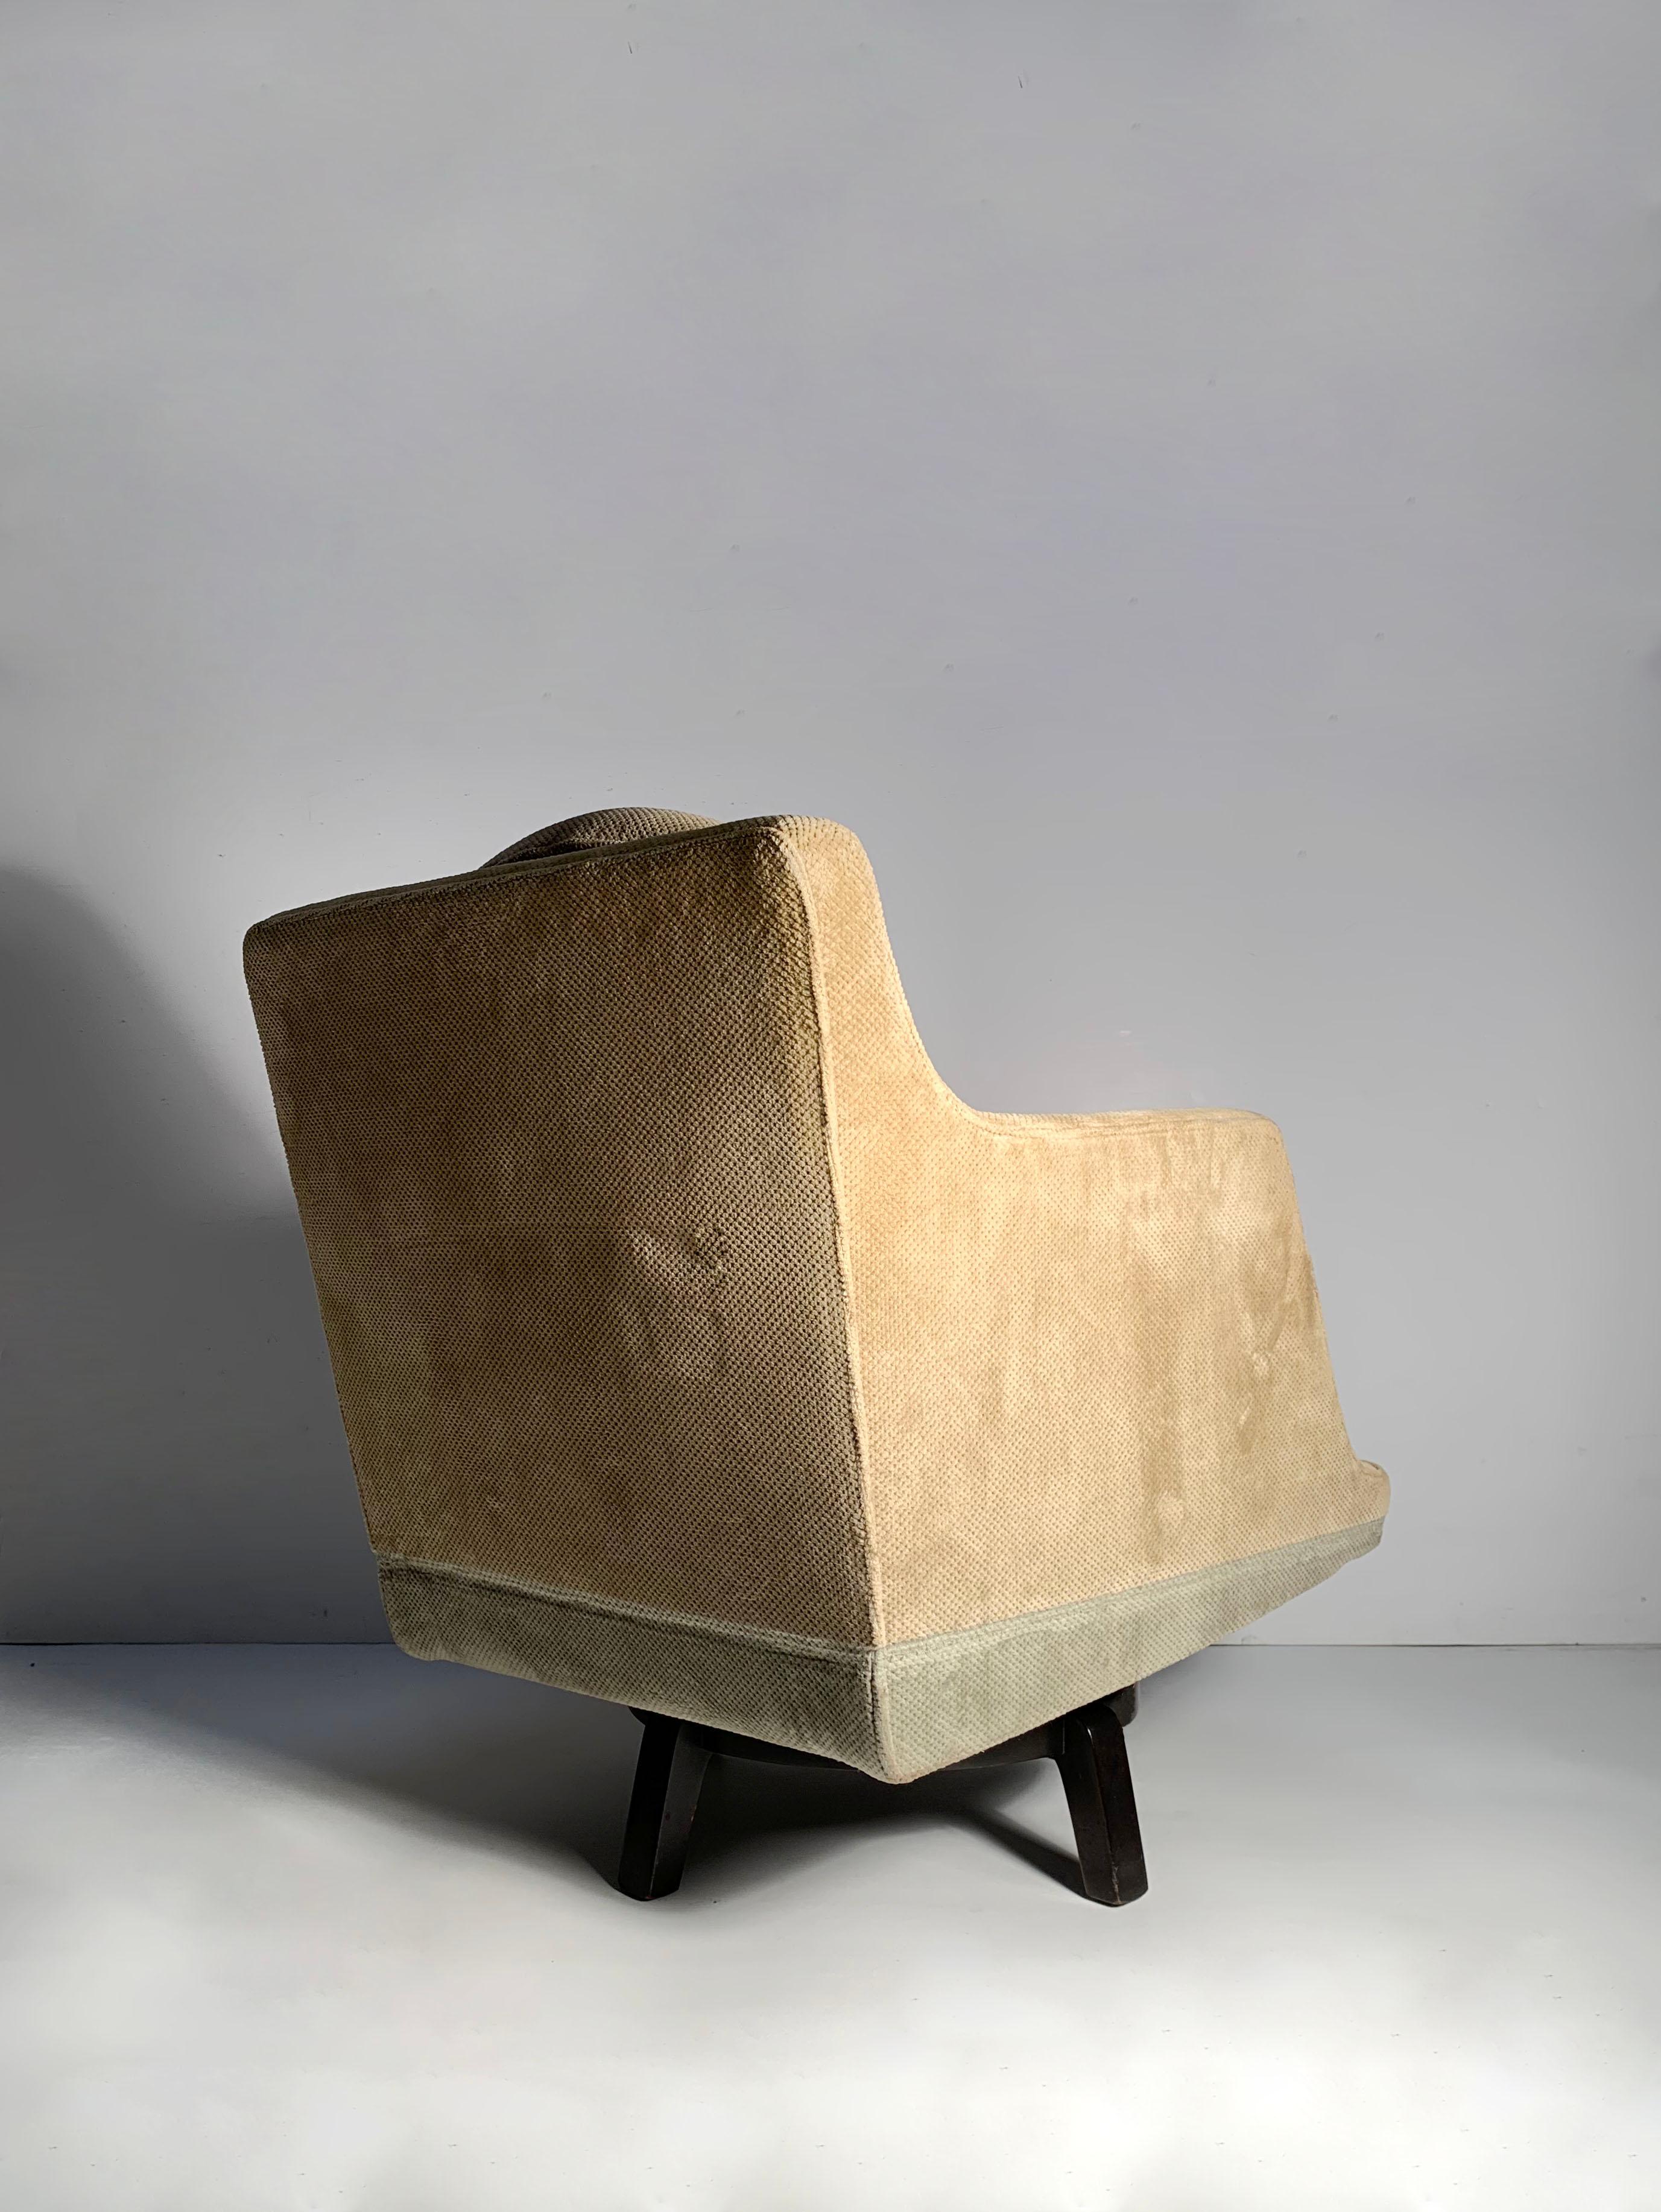 American Edward Wormley Dunbar Swivel Lounge Chair For Sale